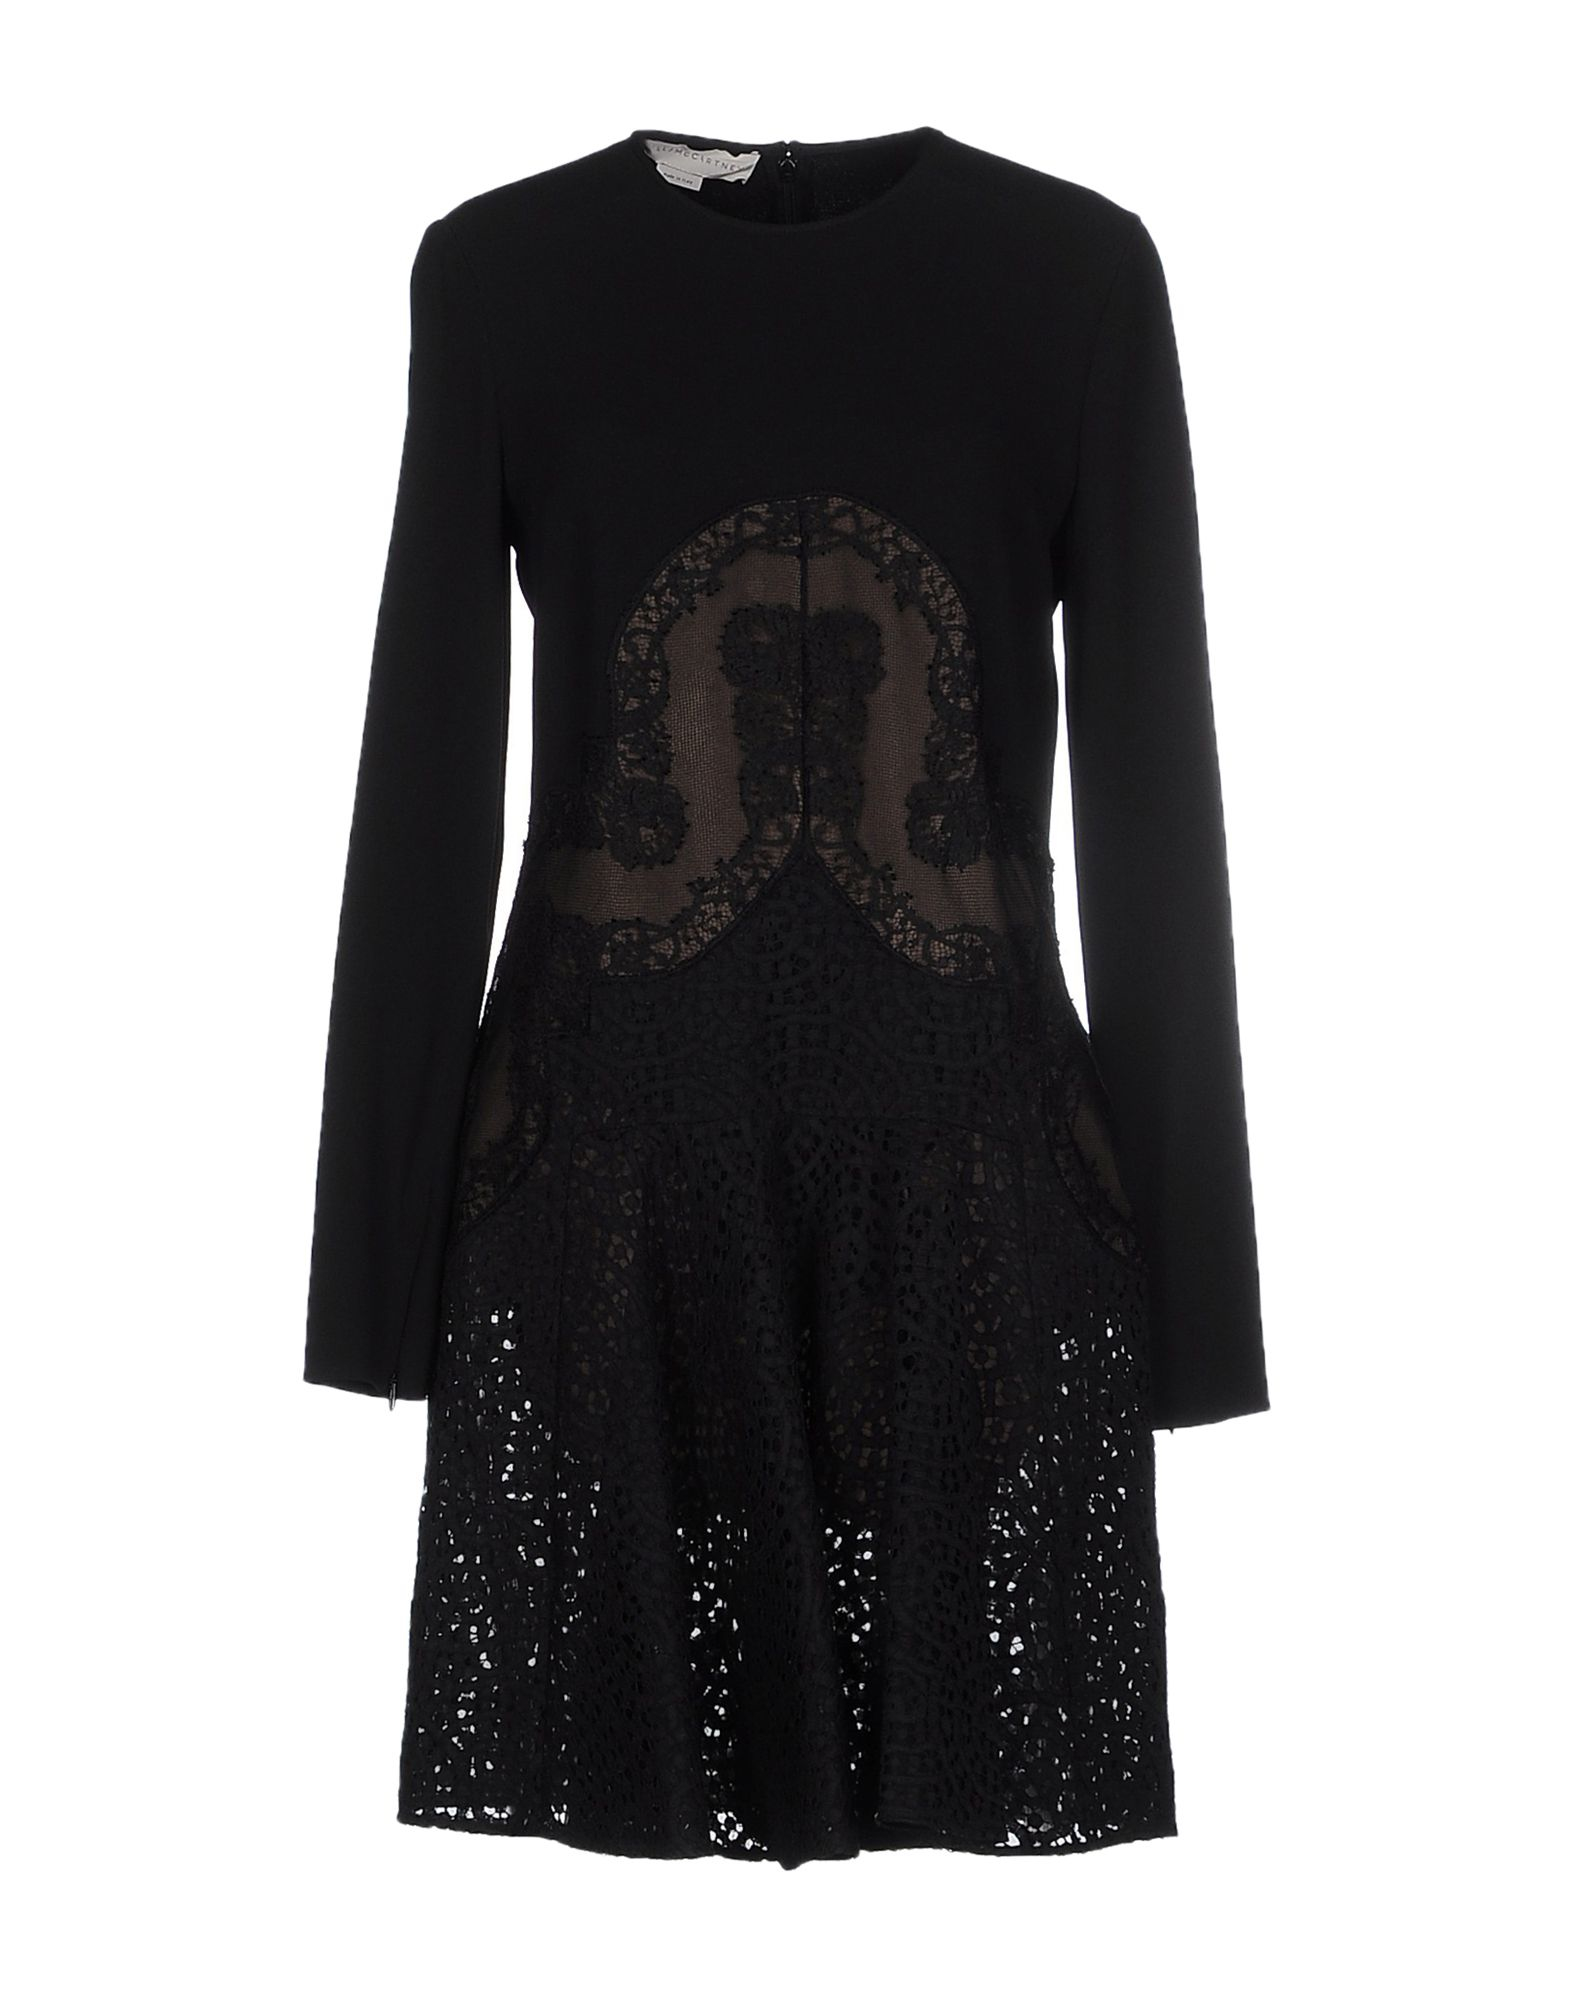 Stella mccartney Short Dress in Multicolor (Black) | Lyst